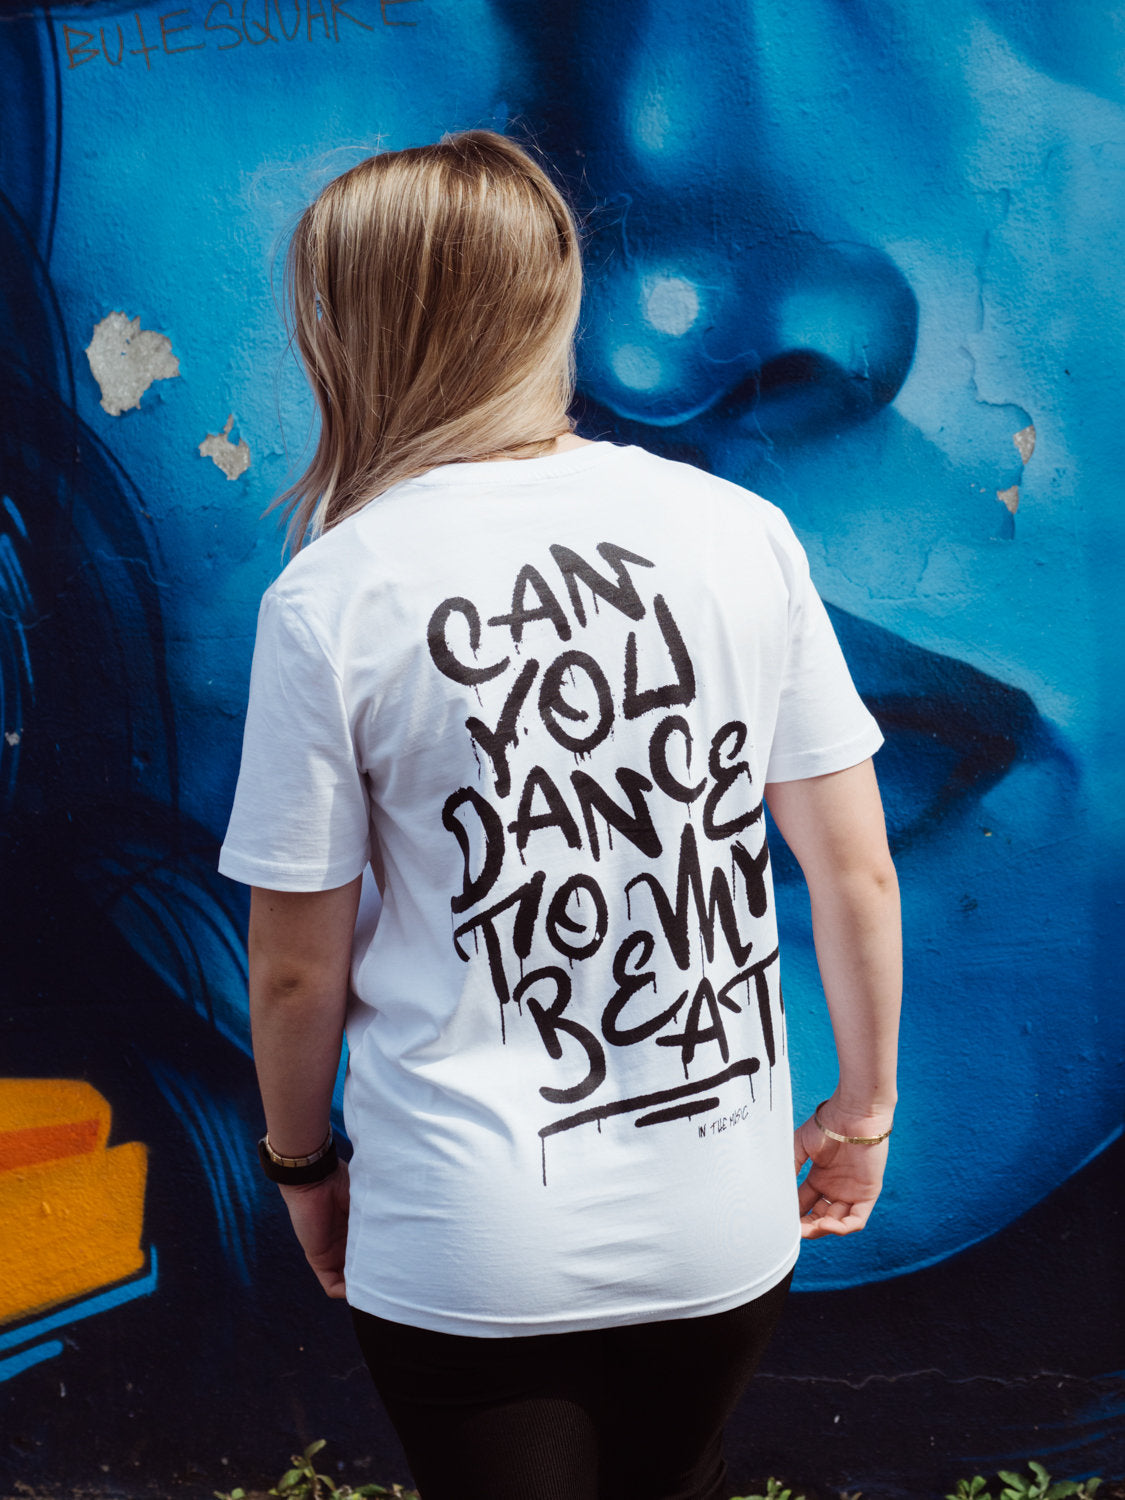 Can You Dance To My Beat T-Shirt Original